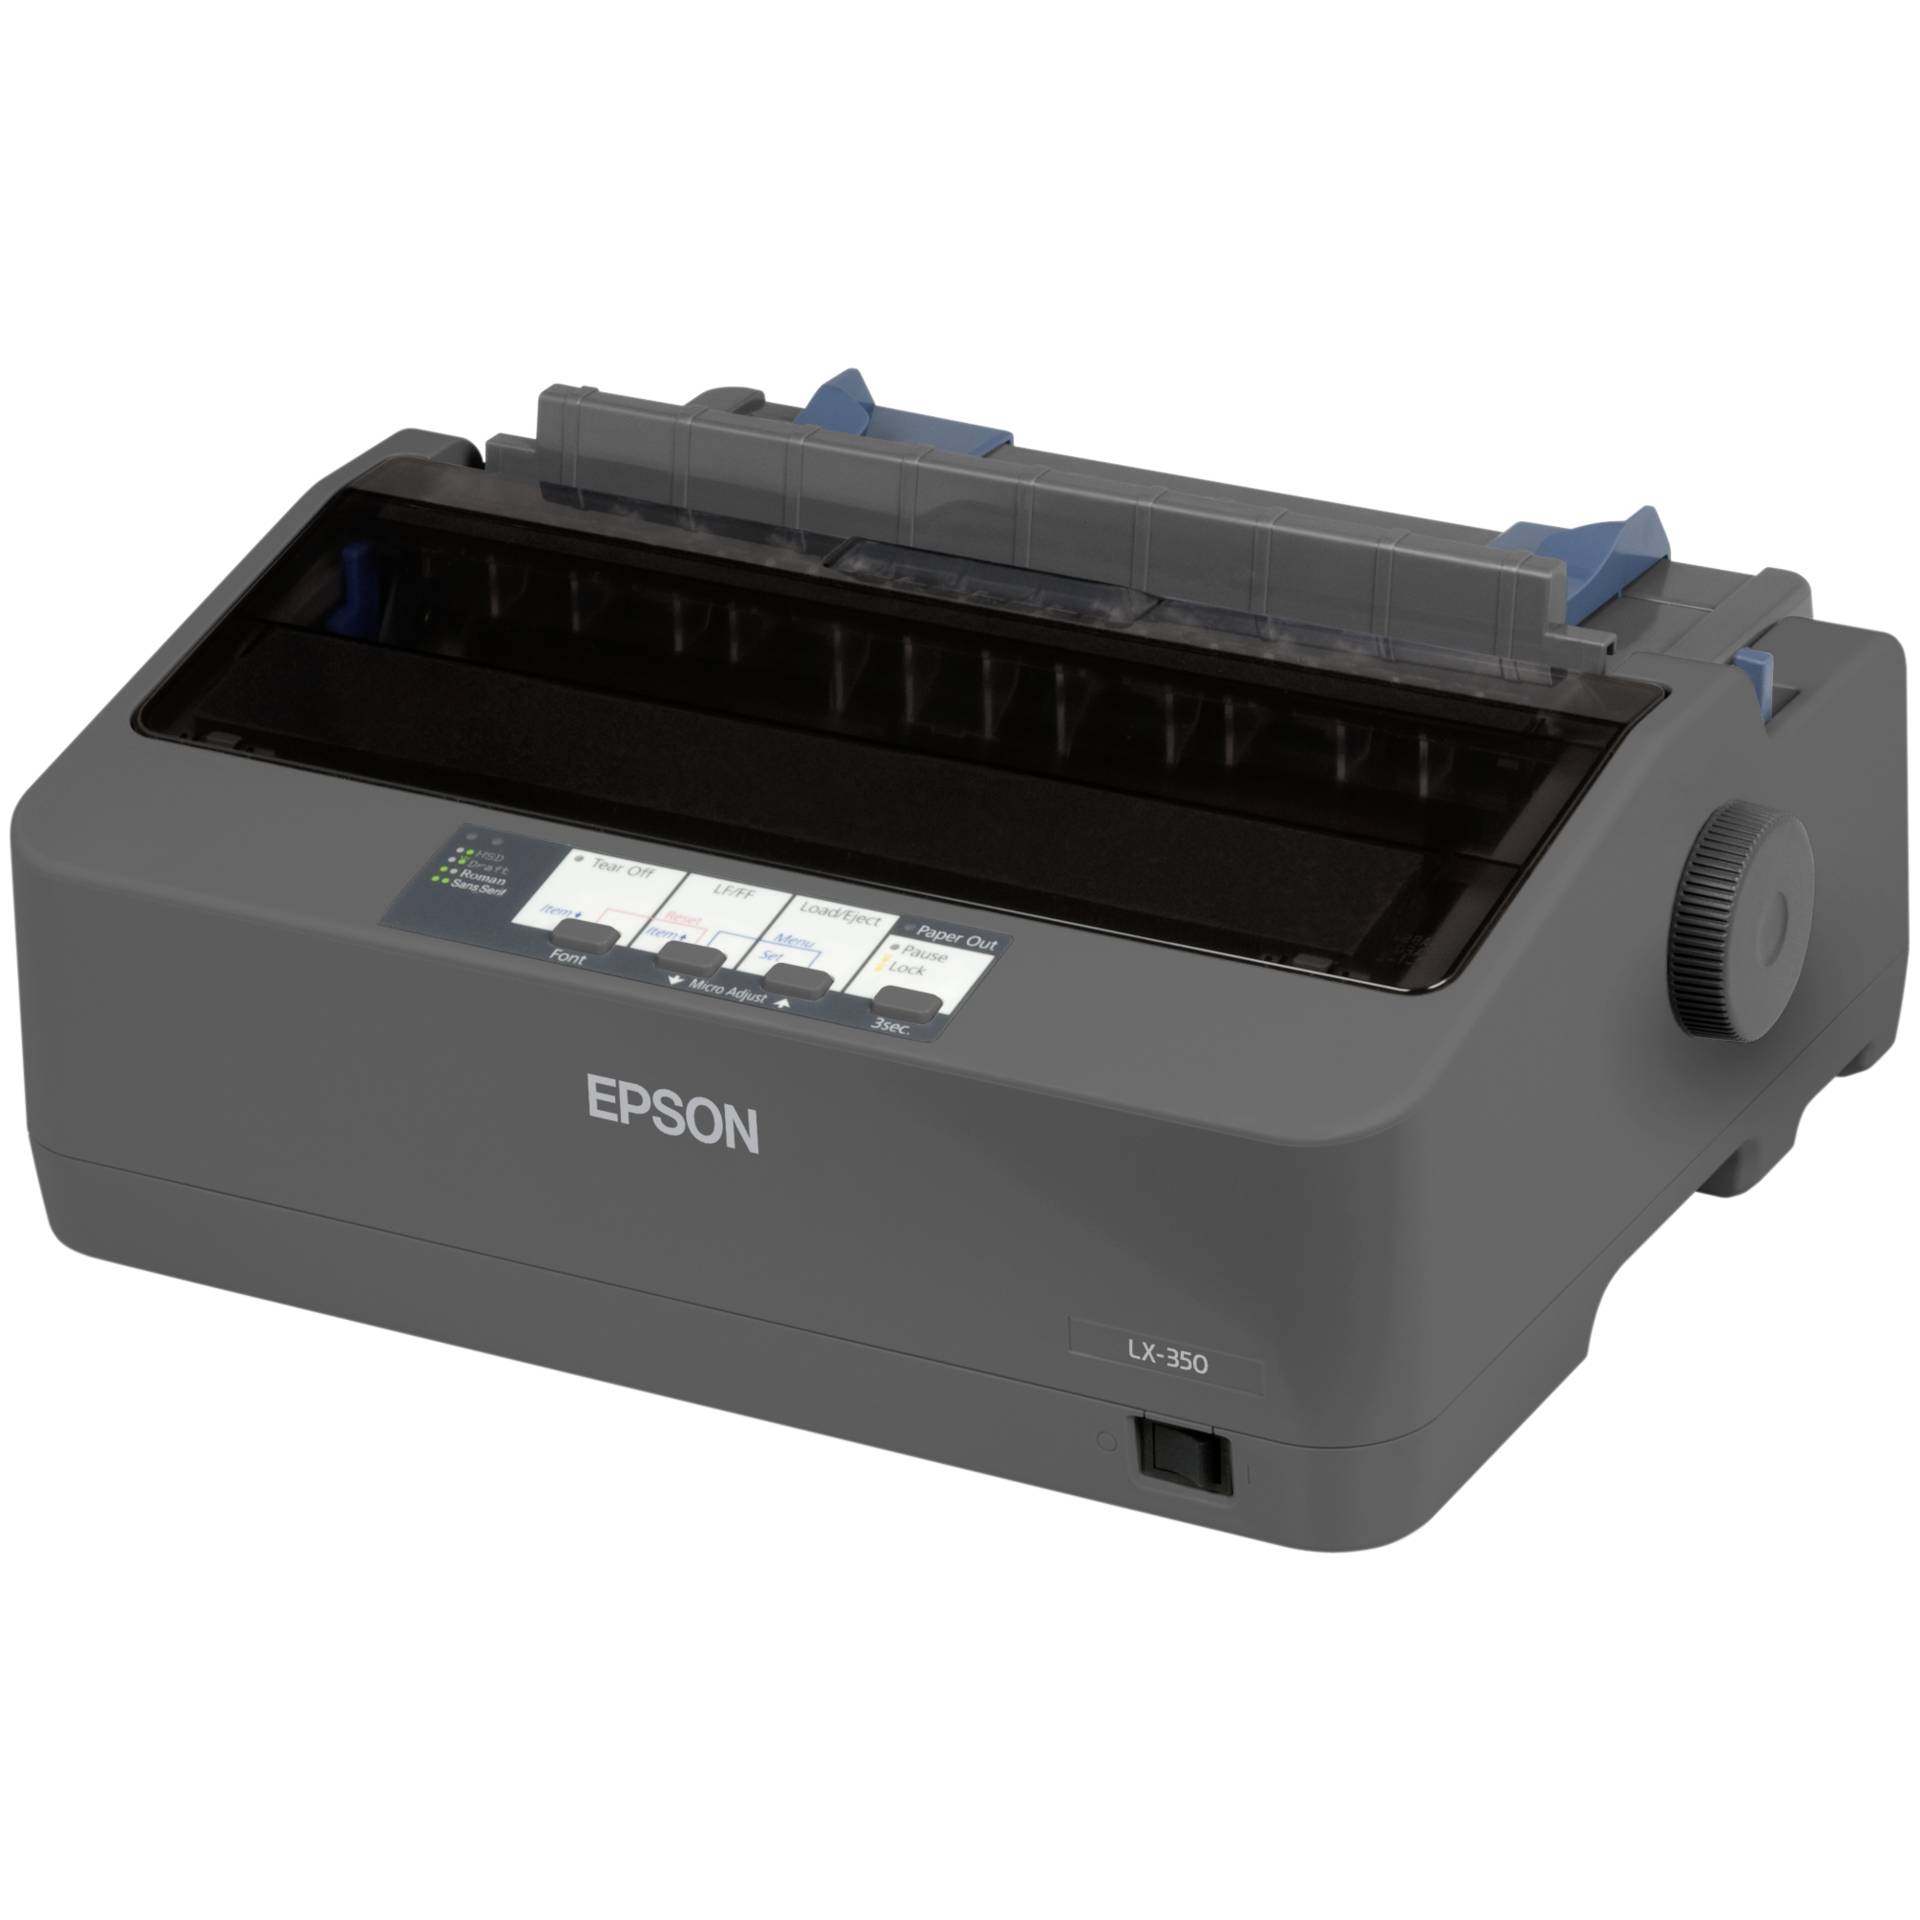 Epson LX-350, 9 Nadeldrucker USB 2.0, parallel, seriell